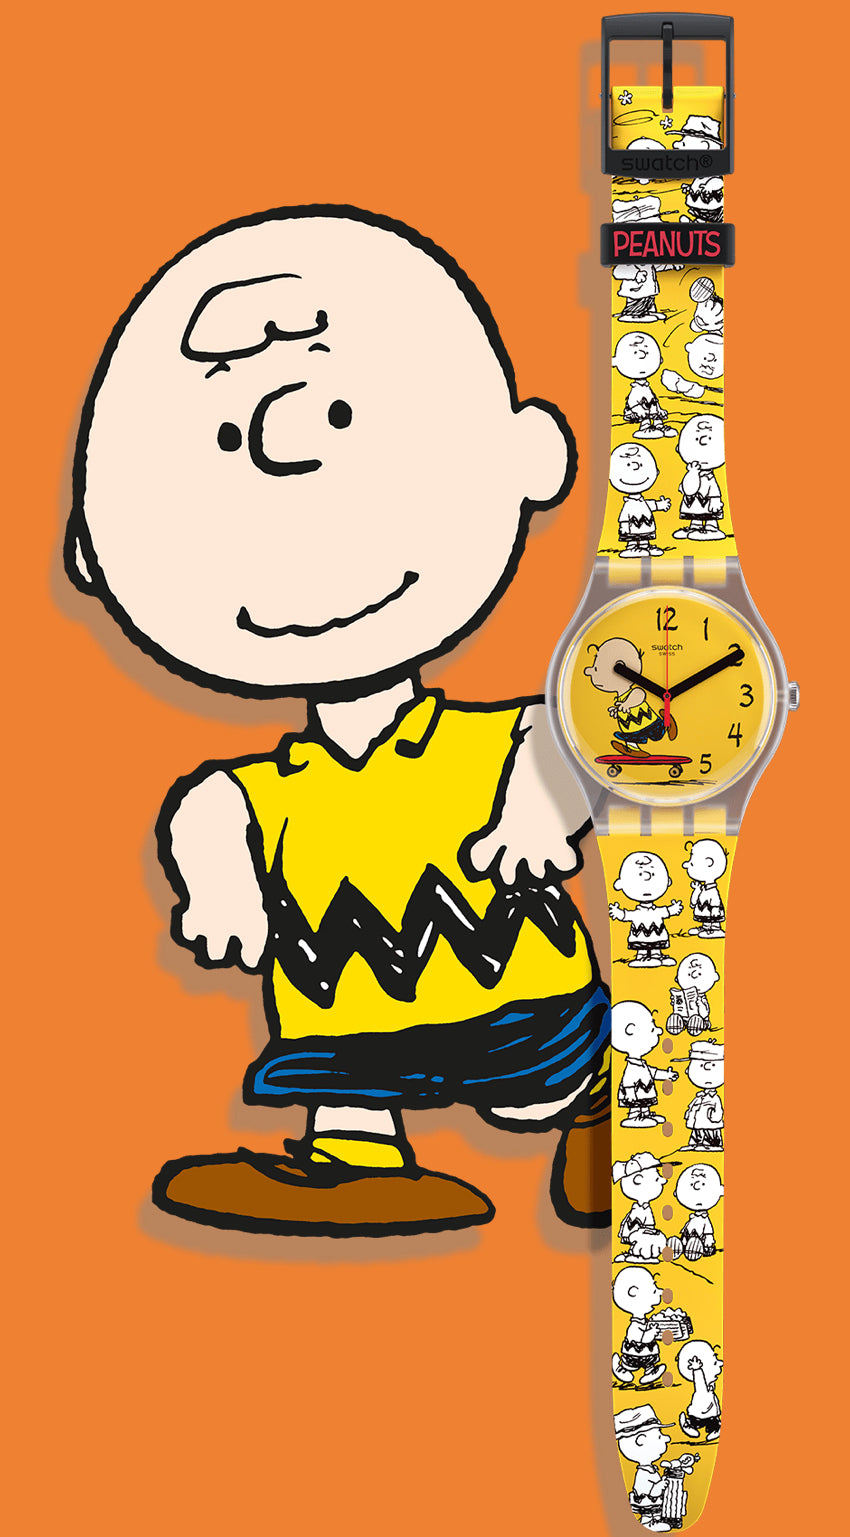 Swatch - Peanuts Watch